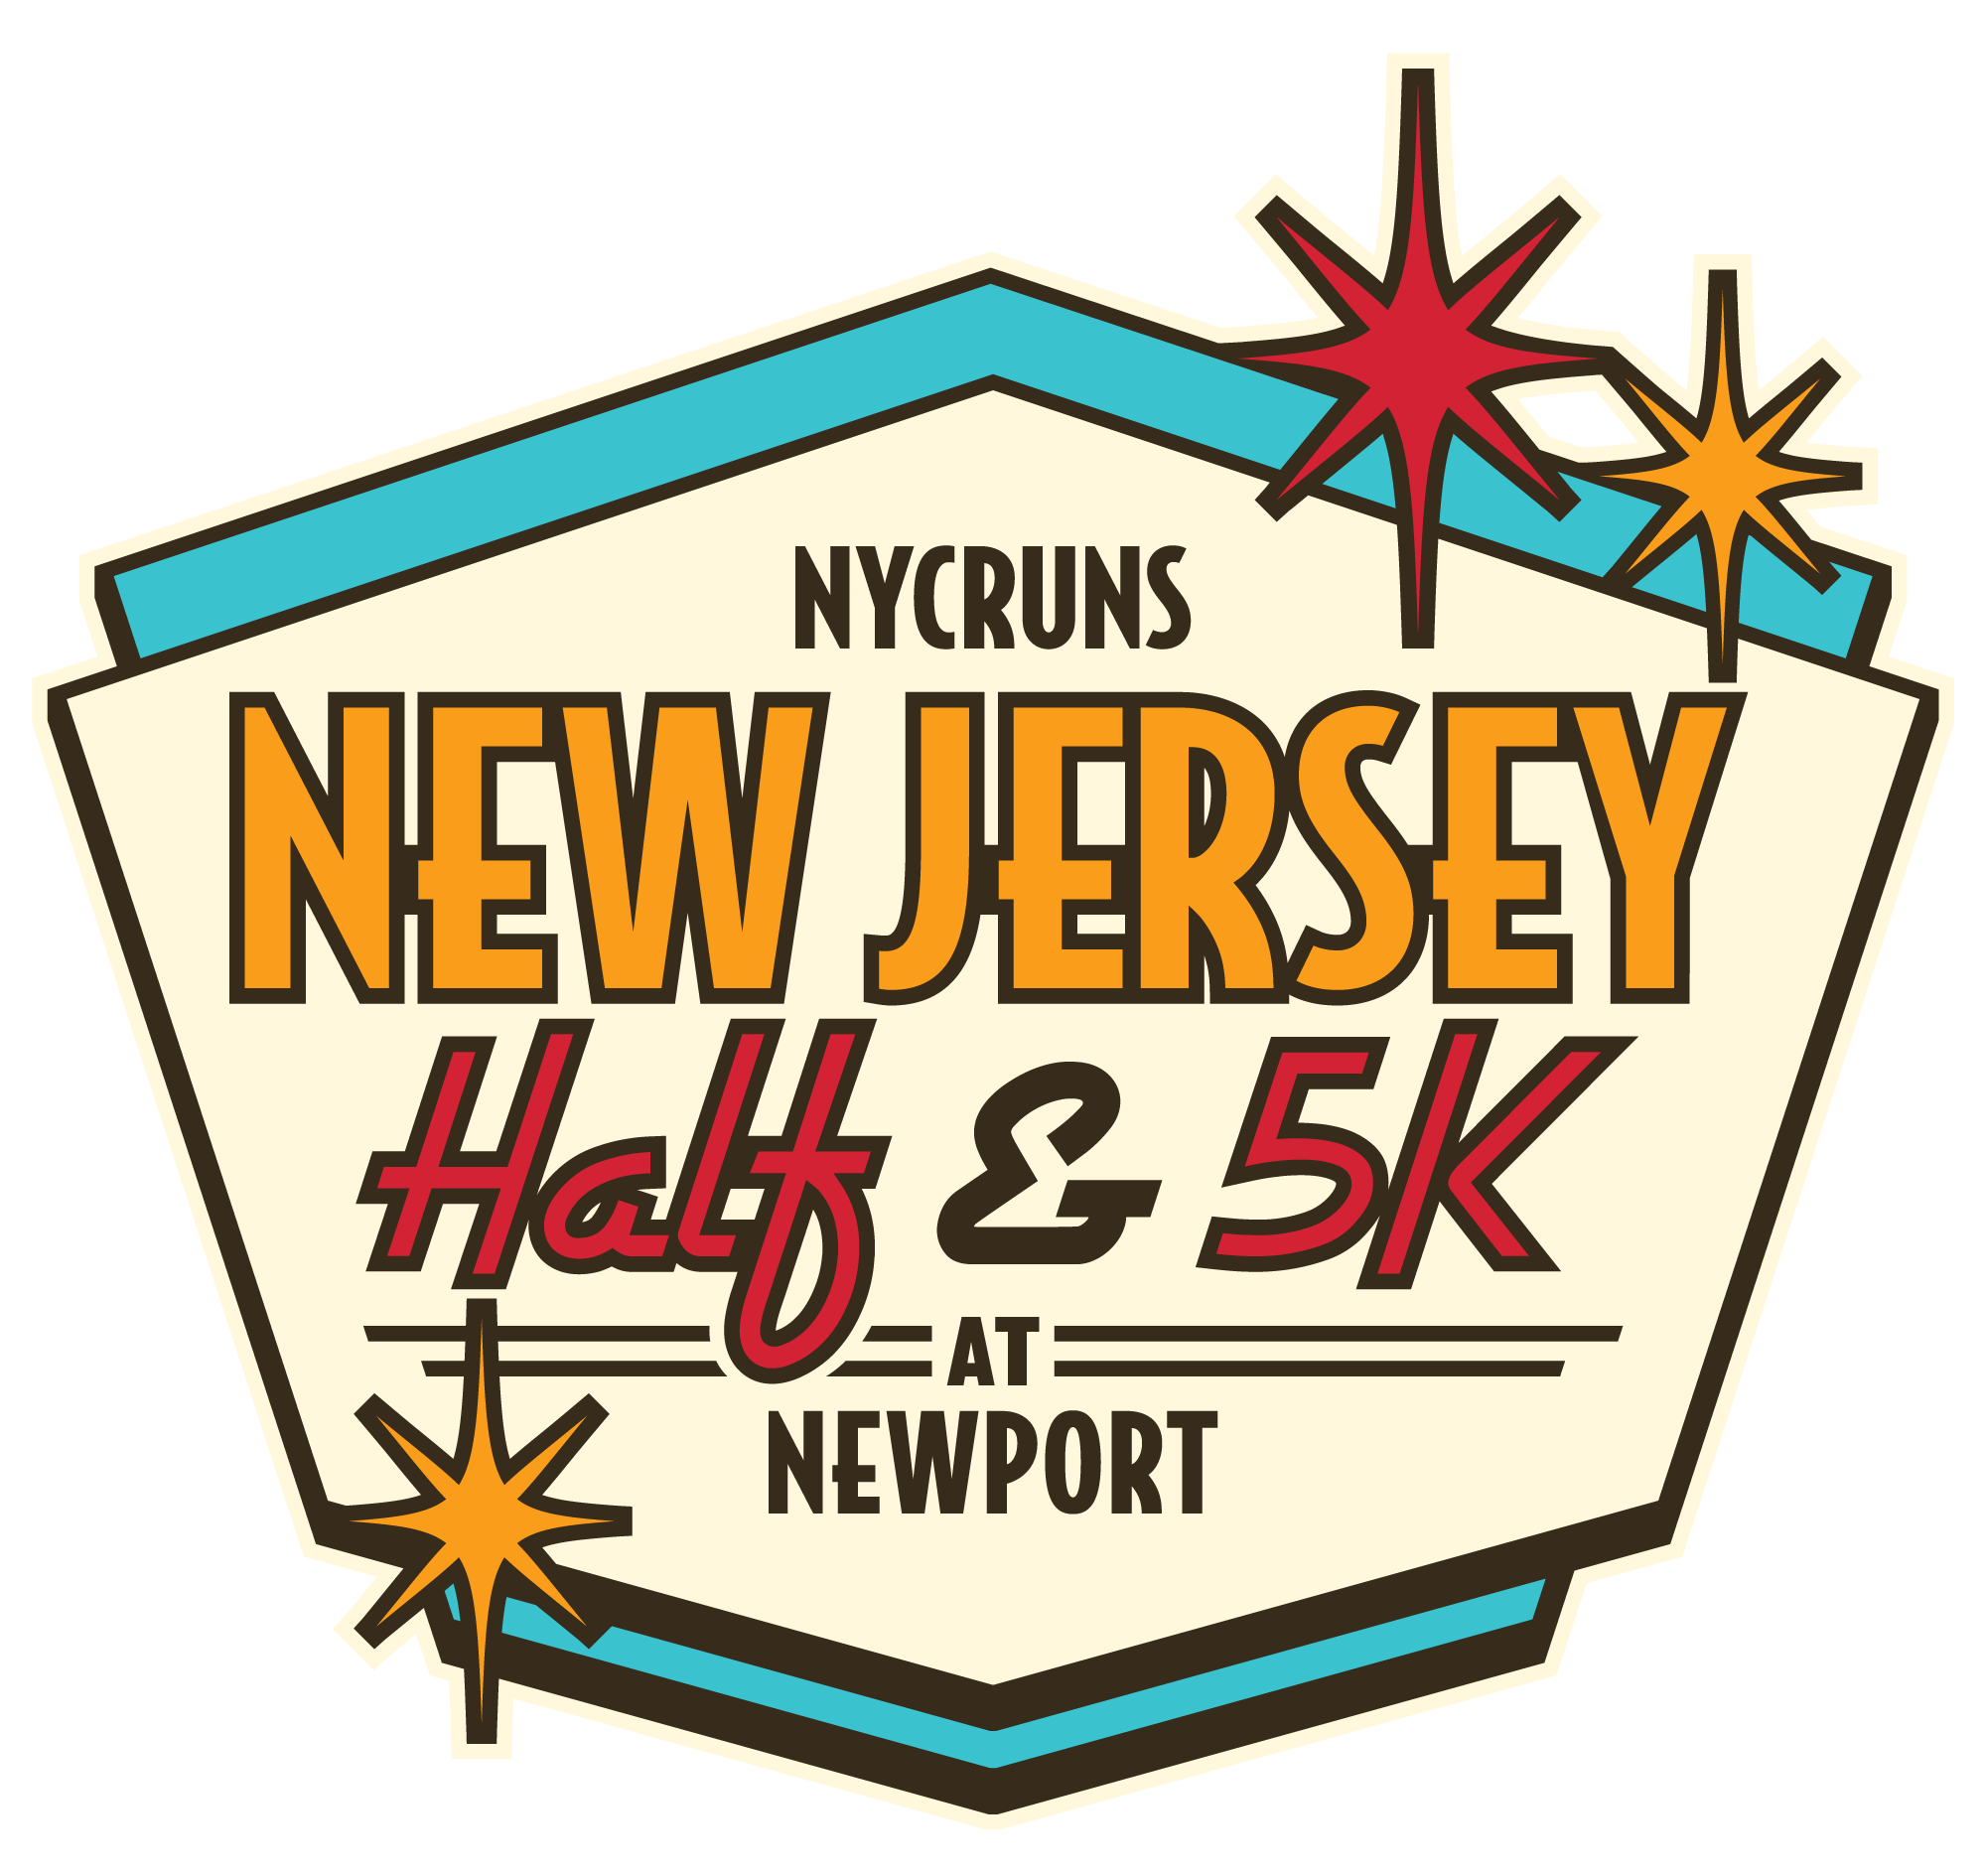 New Jersey Half Marathon & 5K at Newport New York City's Best Races